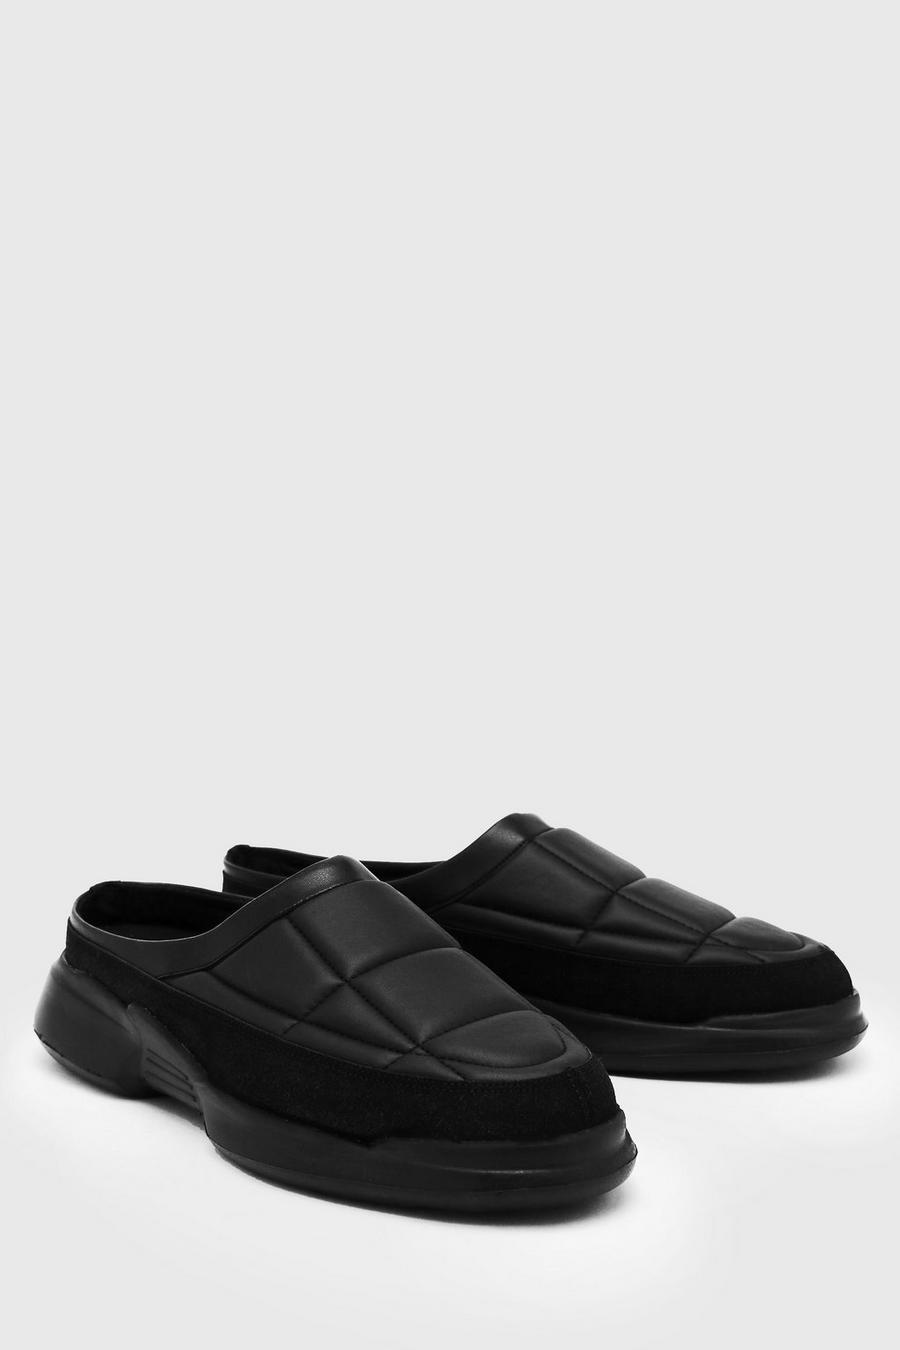 Black nero נעלי מיול מבד דמוי עור בדוגמת קווילט